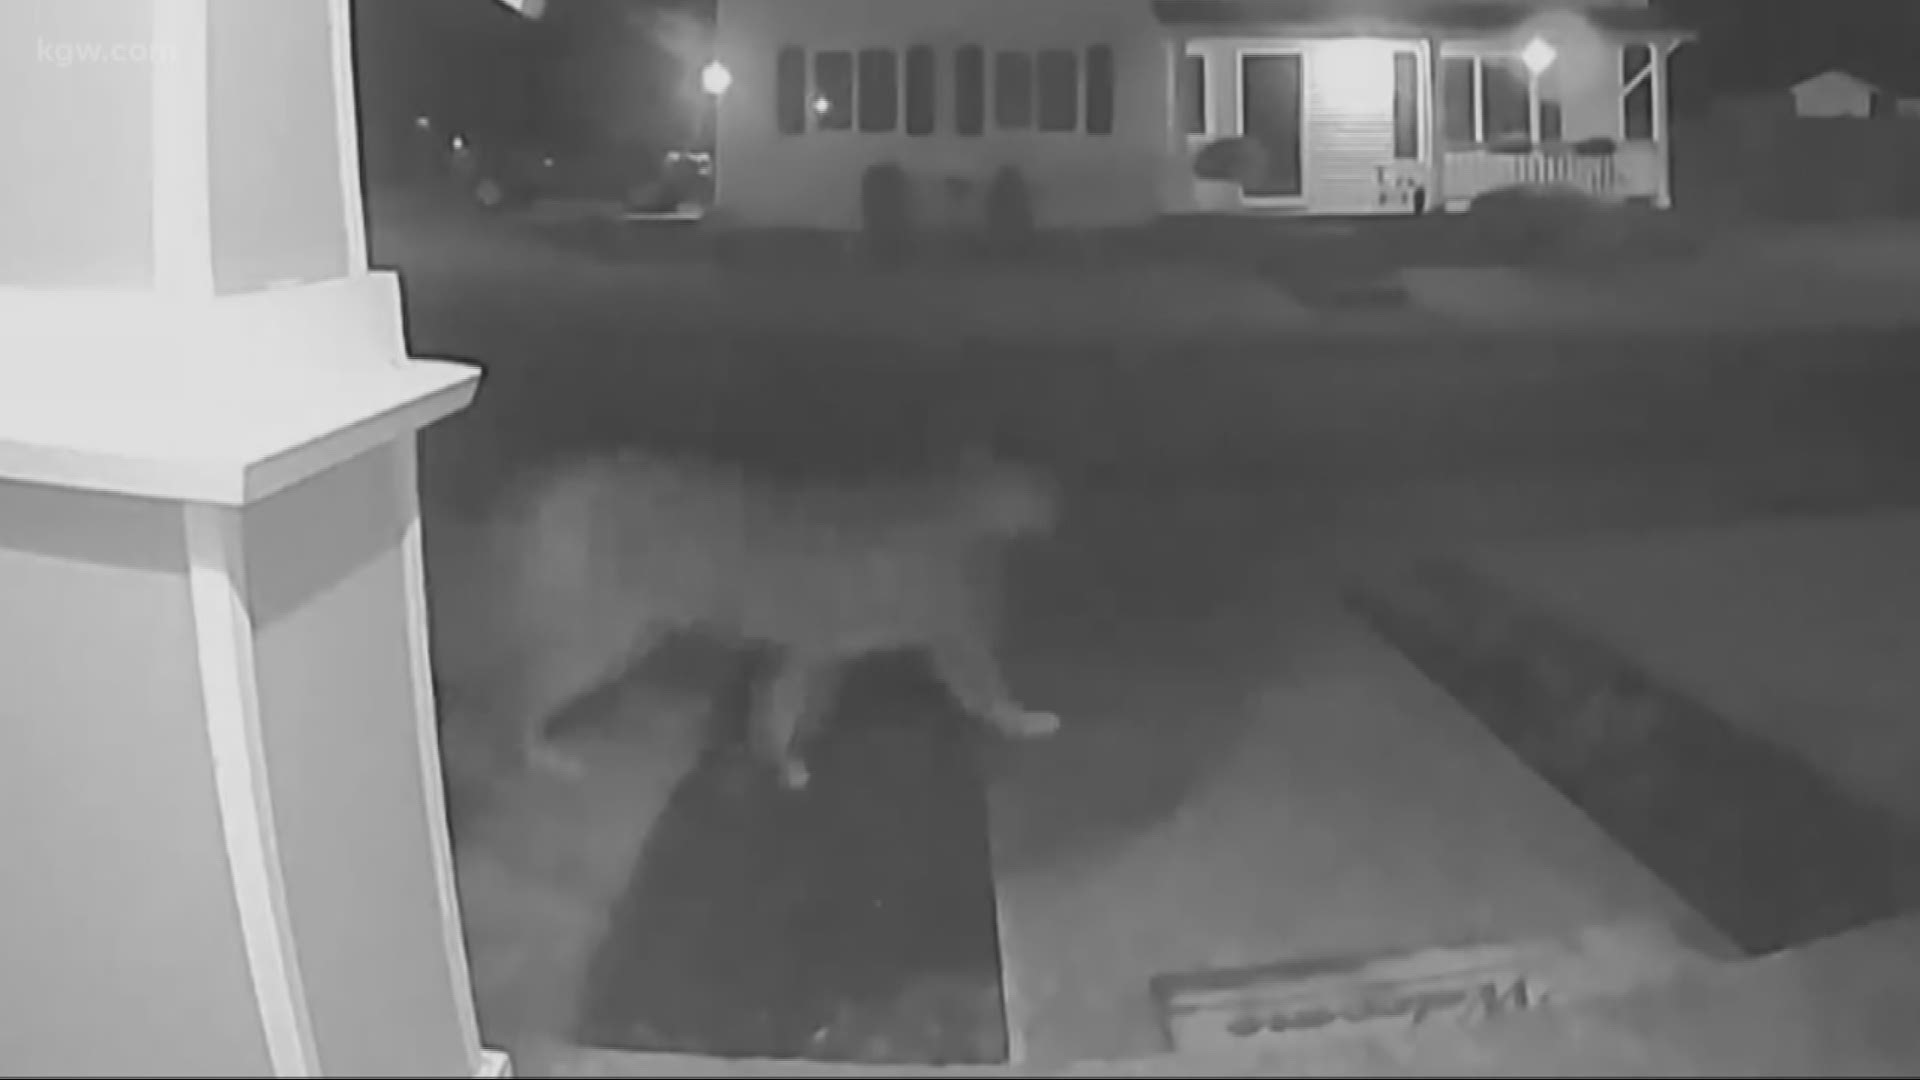 Cougar caught on camera in Sandy neighborhood